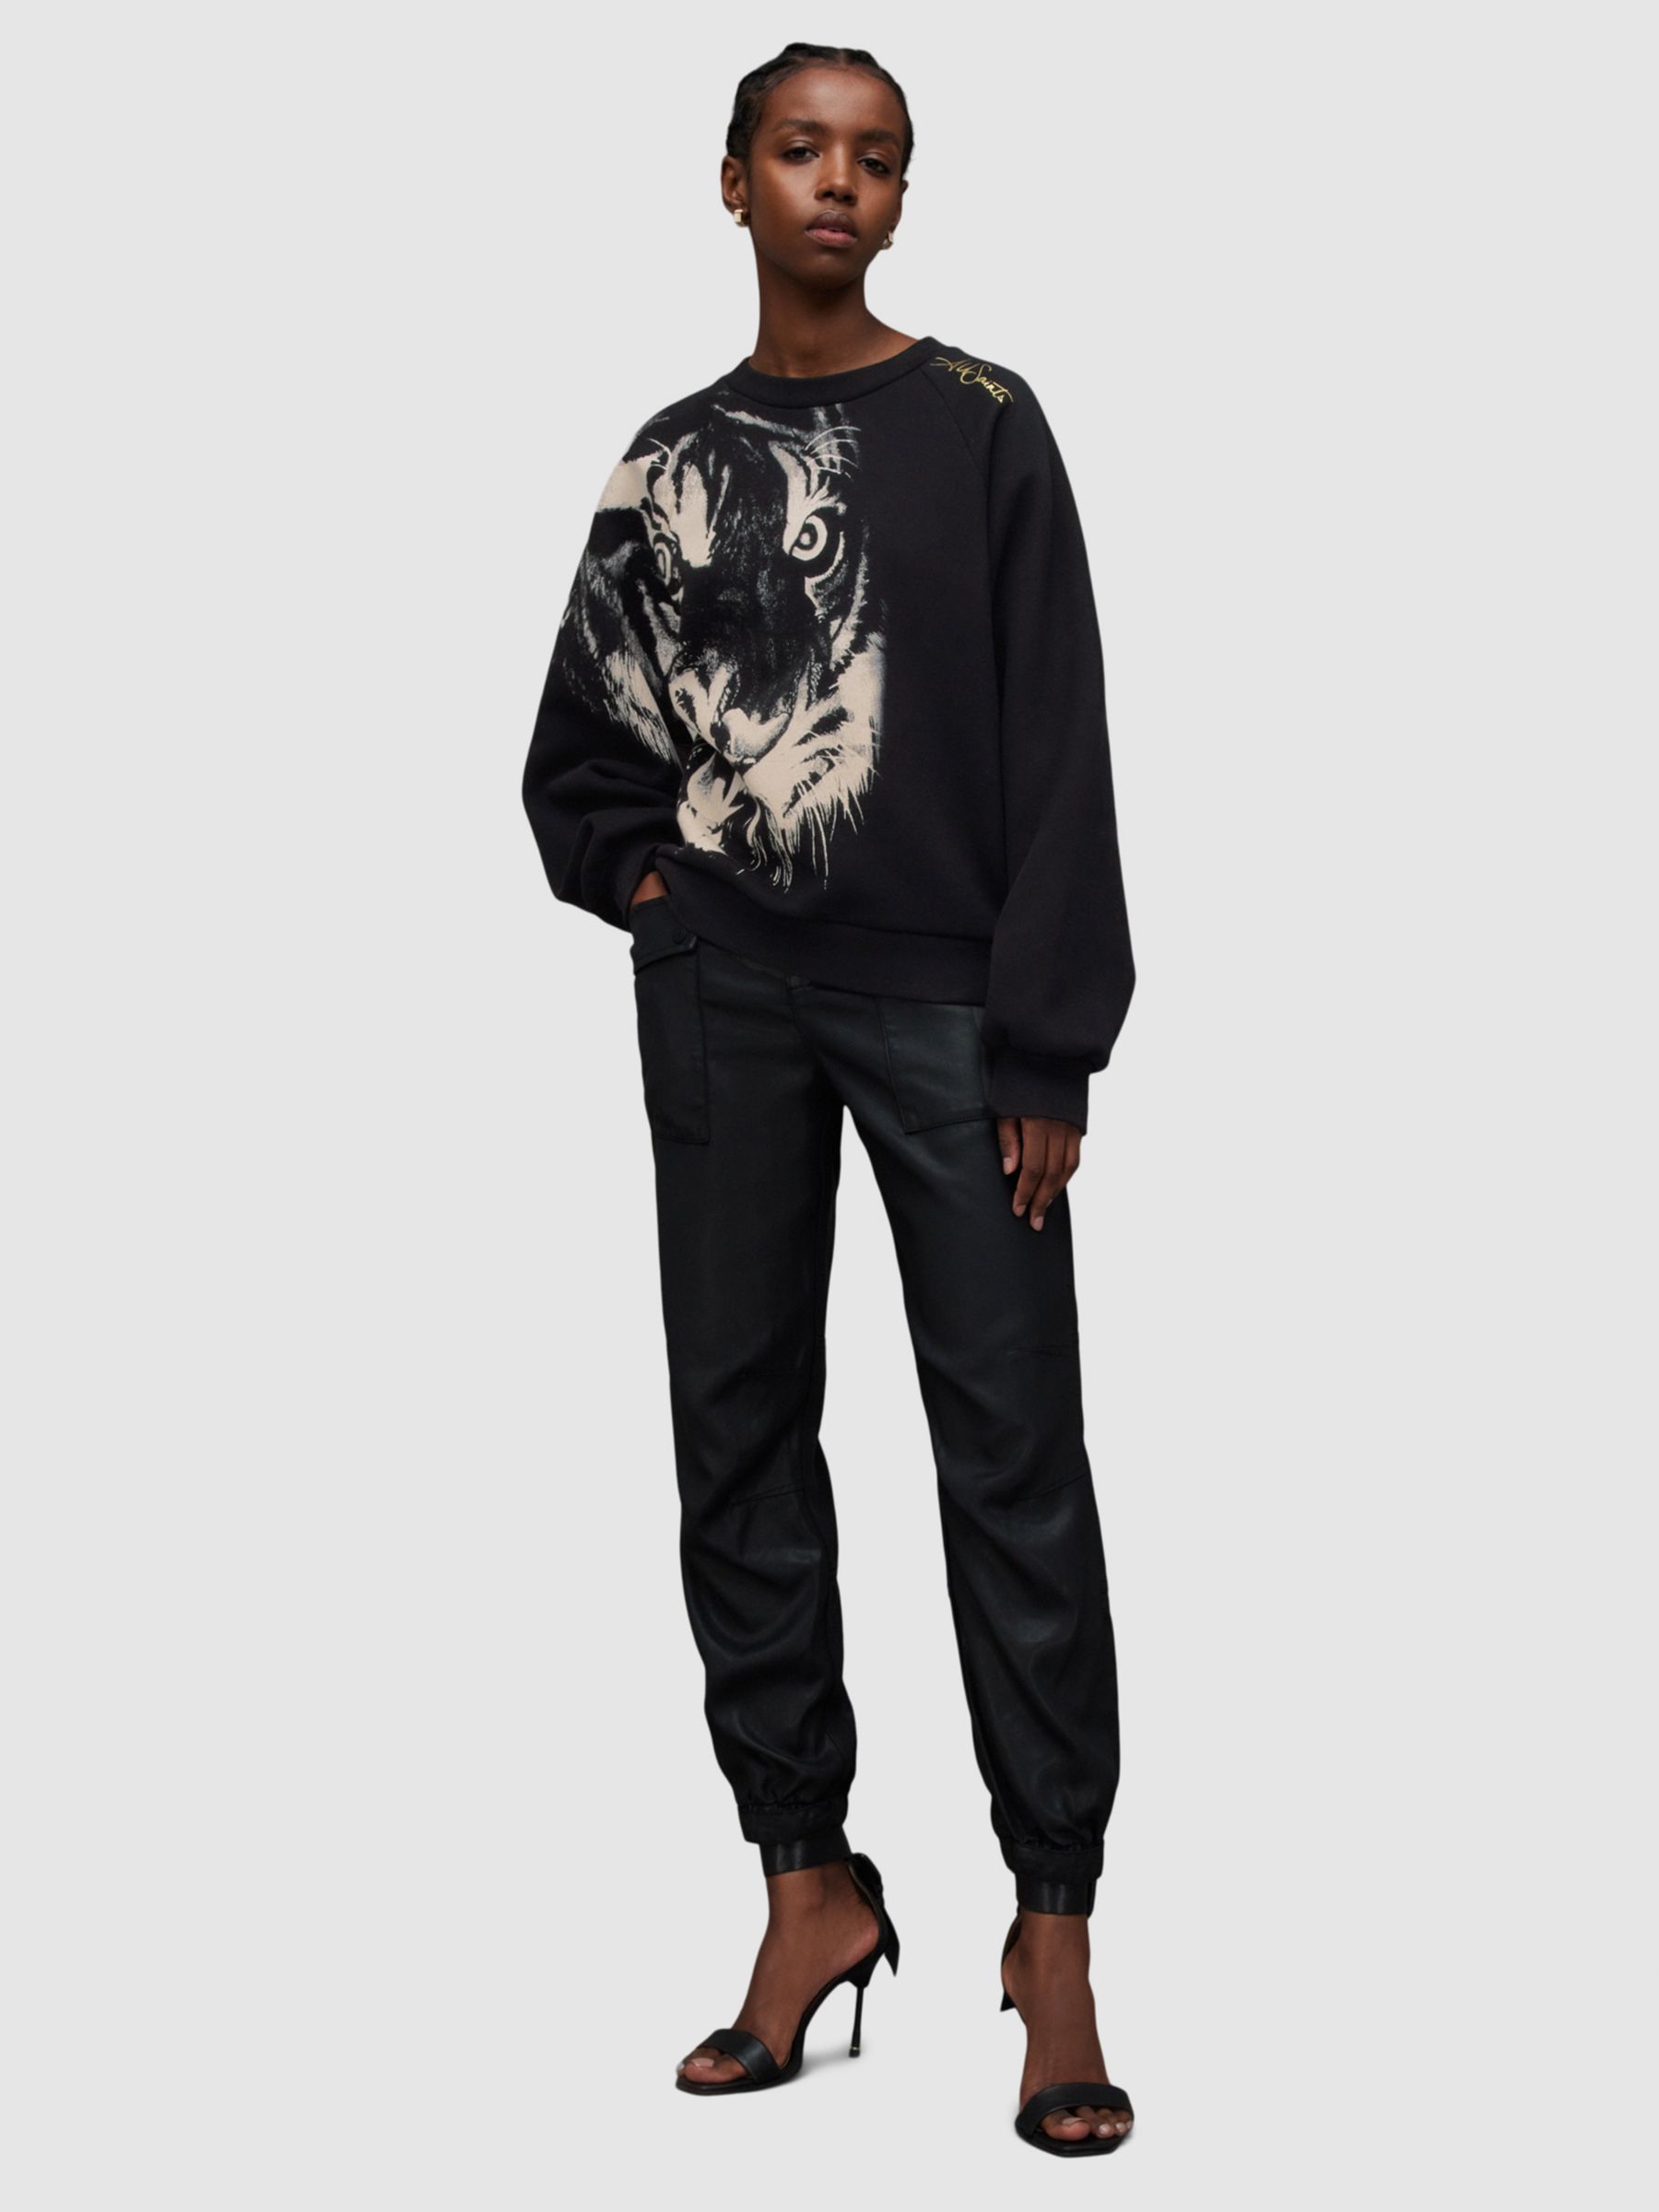 AllSaints Turin Cygni Sweatshirt, Black at John Lewis & Partners